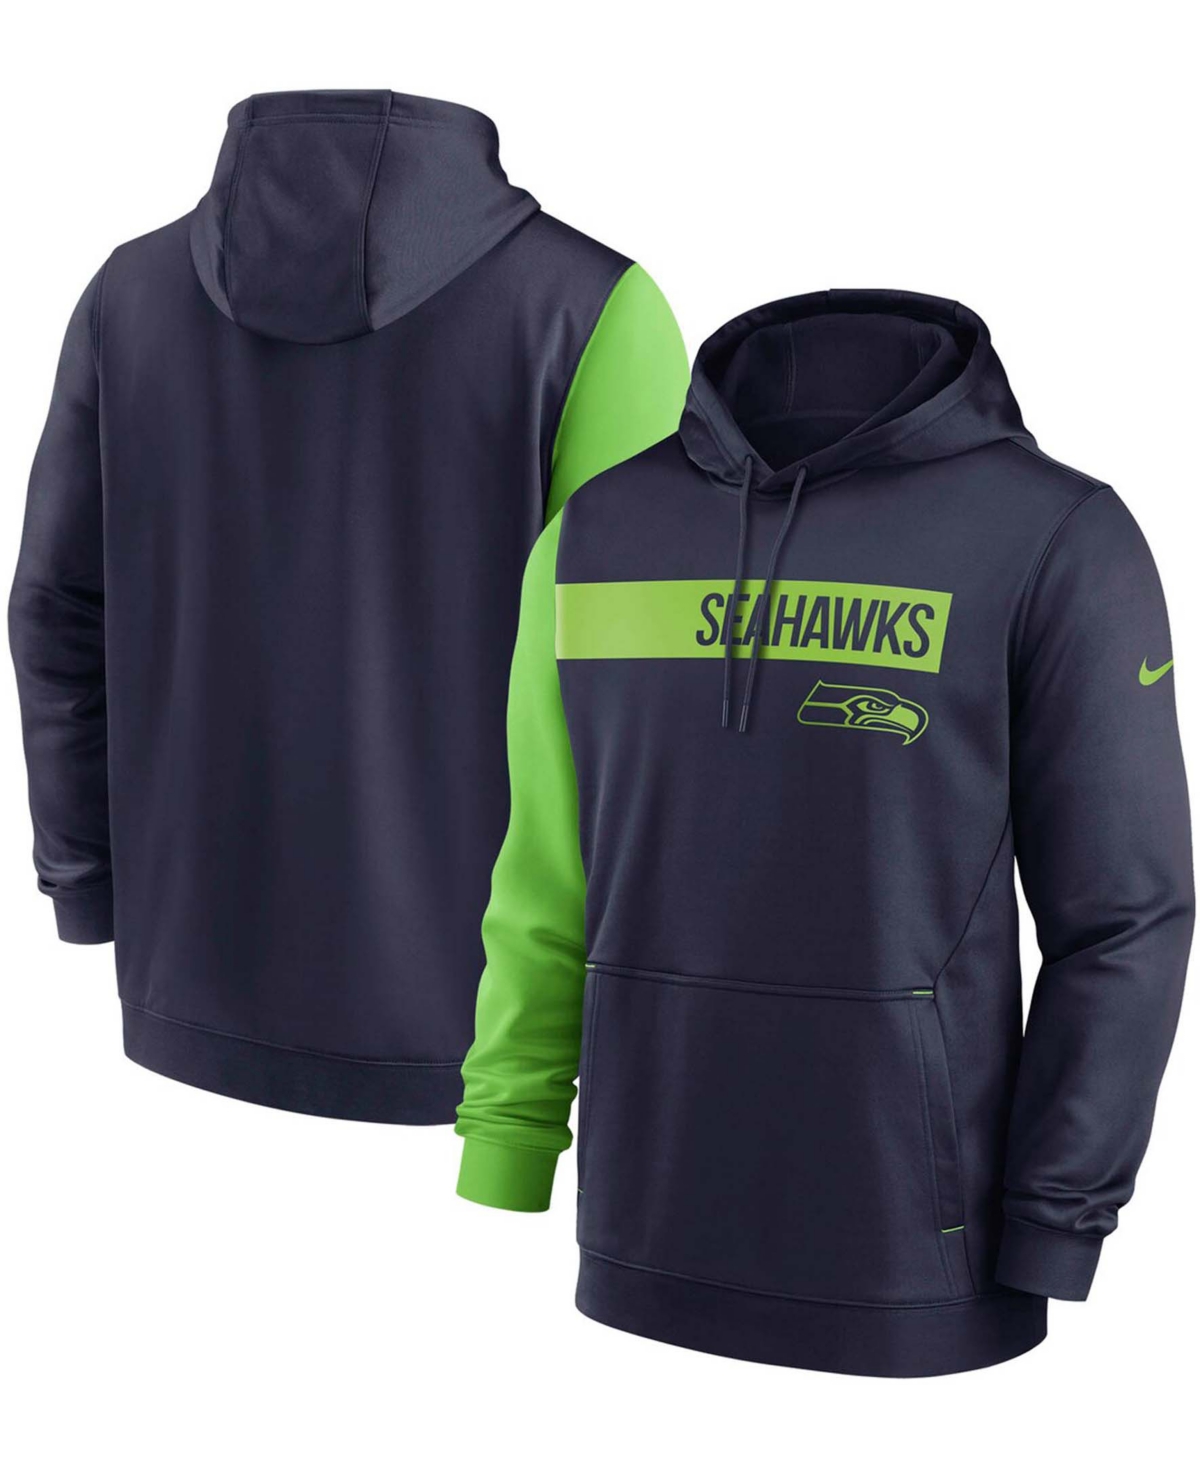 Nike Men's College Navy, Neon Green Seattle Seahawks Colorblock Performance Pullover Hoodie